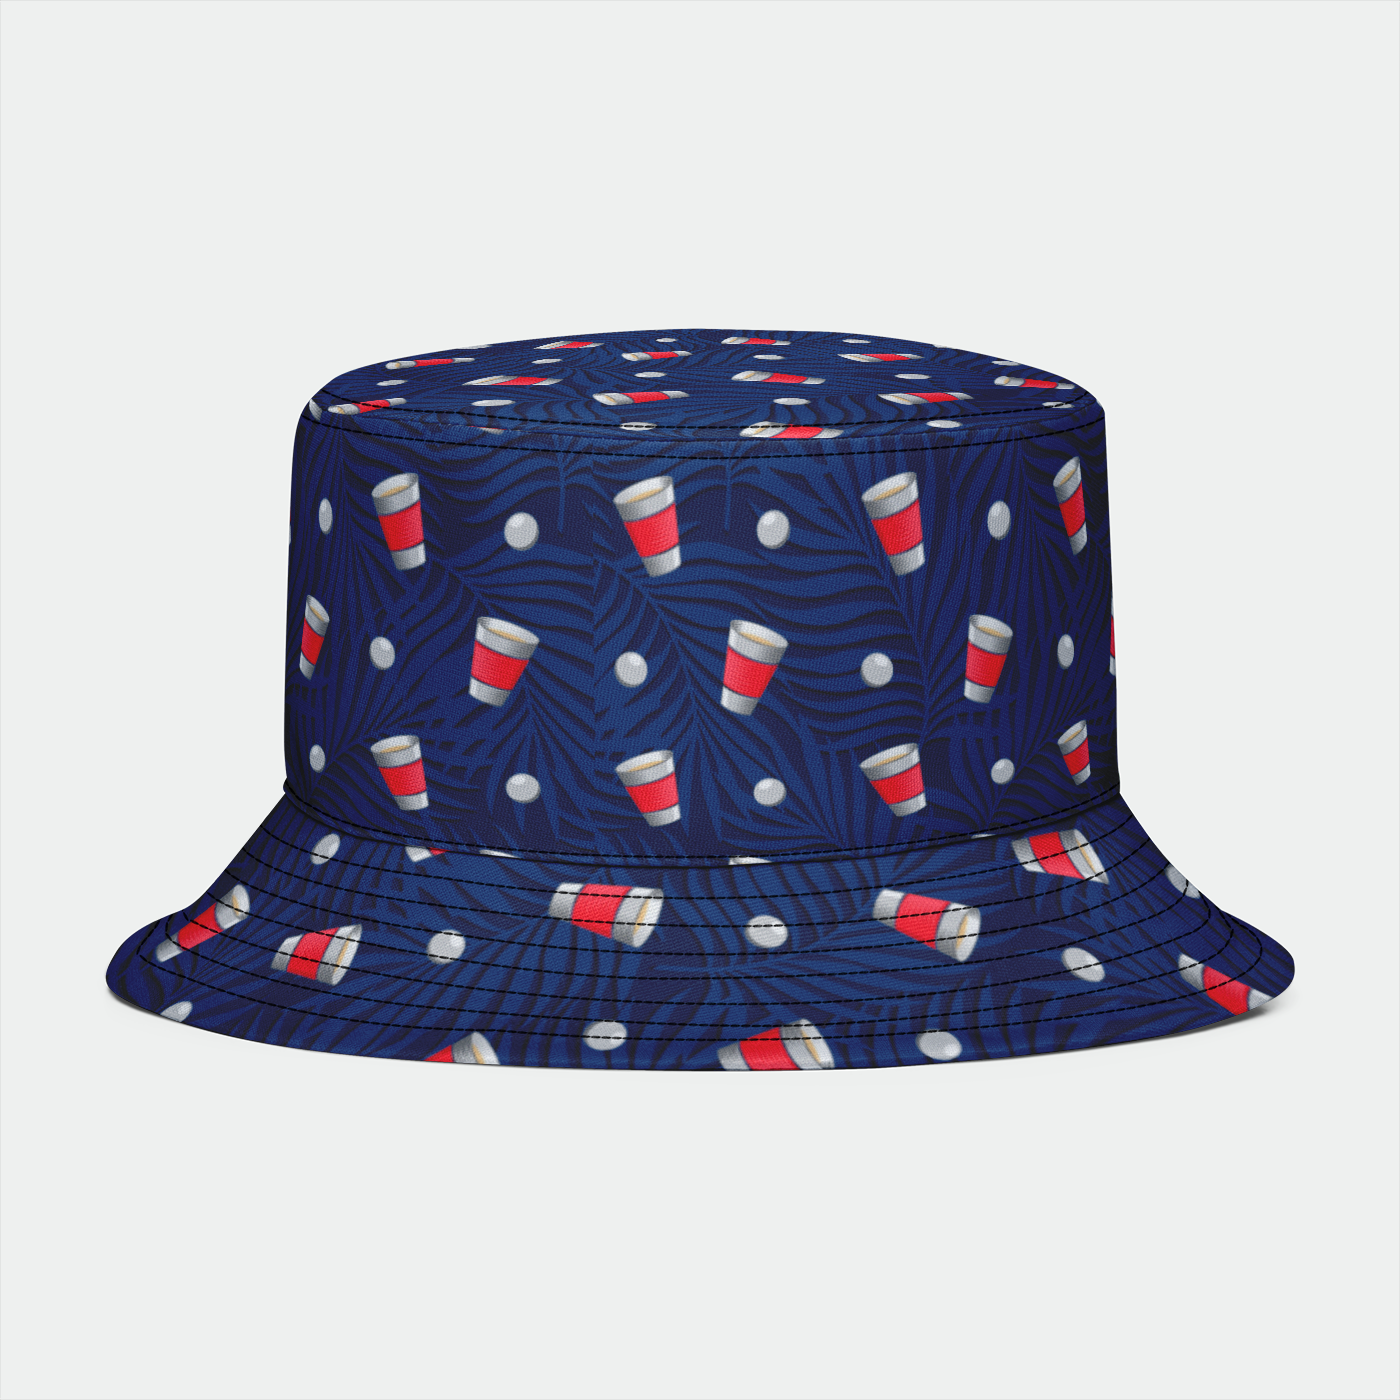 Rad Palm Beer Pong Bucket Hat